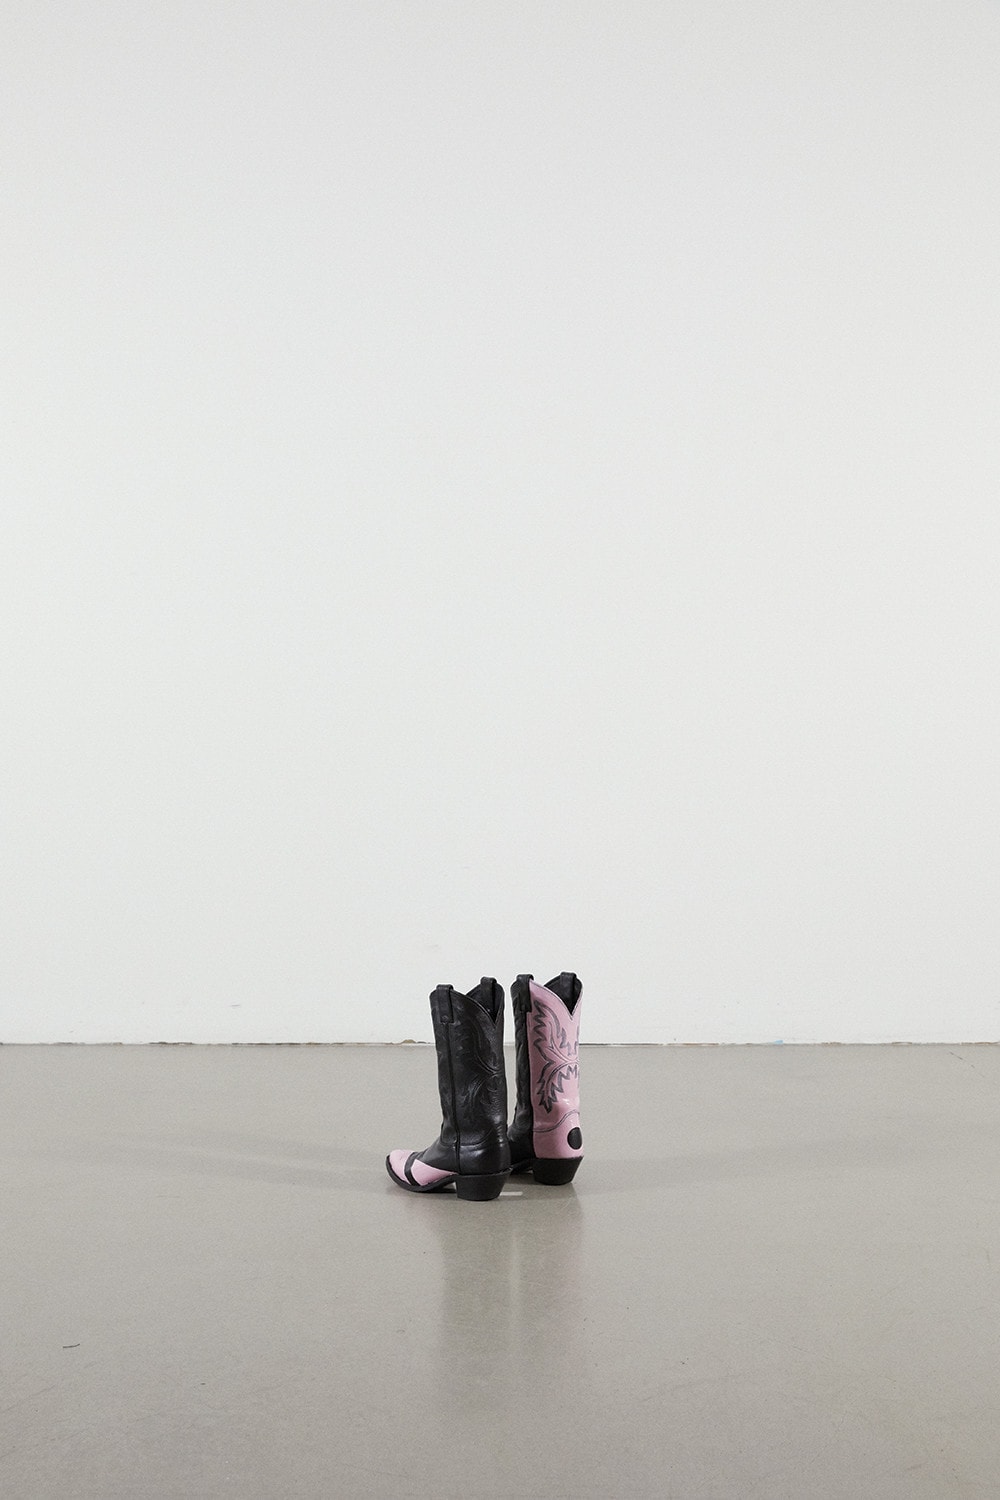 Helmut Lang Jeans Under Construction Capsule Lookbook Nocona Cowboy Boots Pink Black